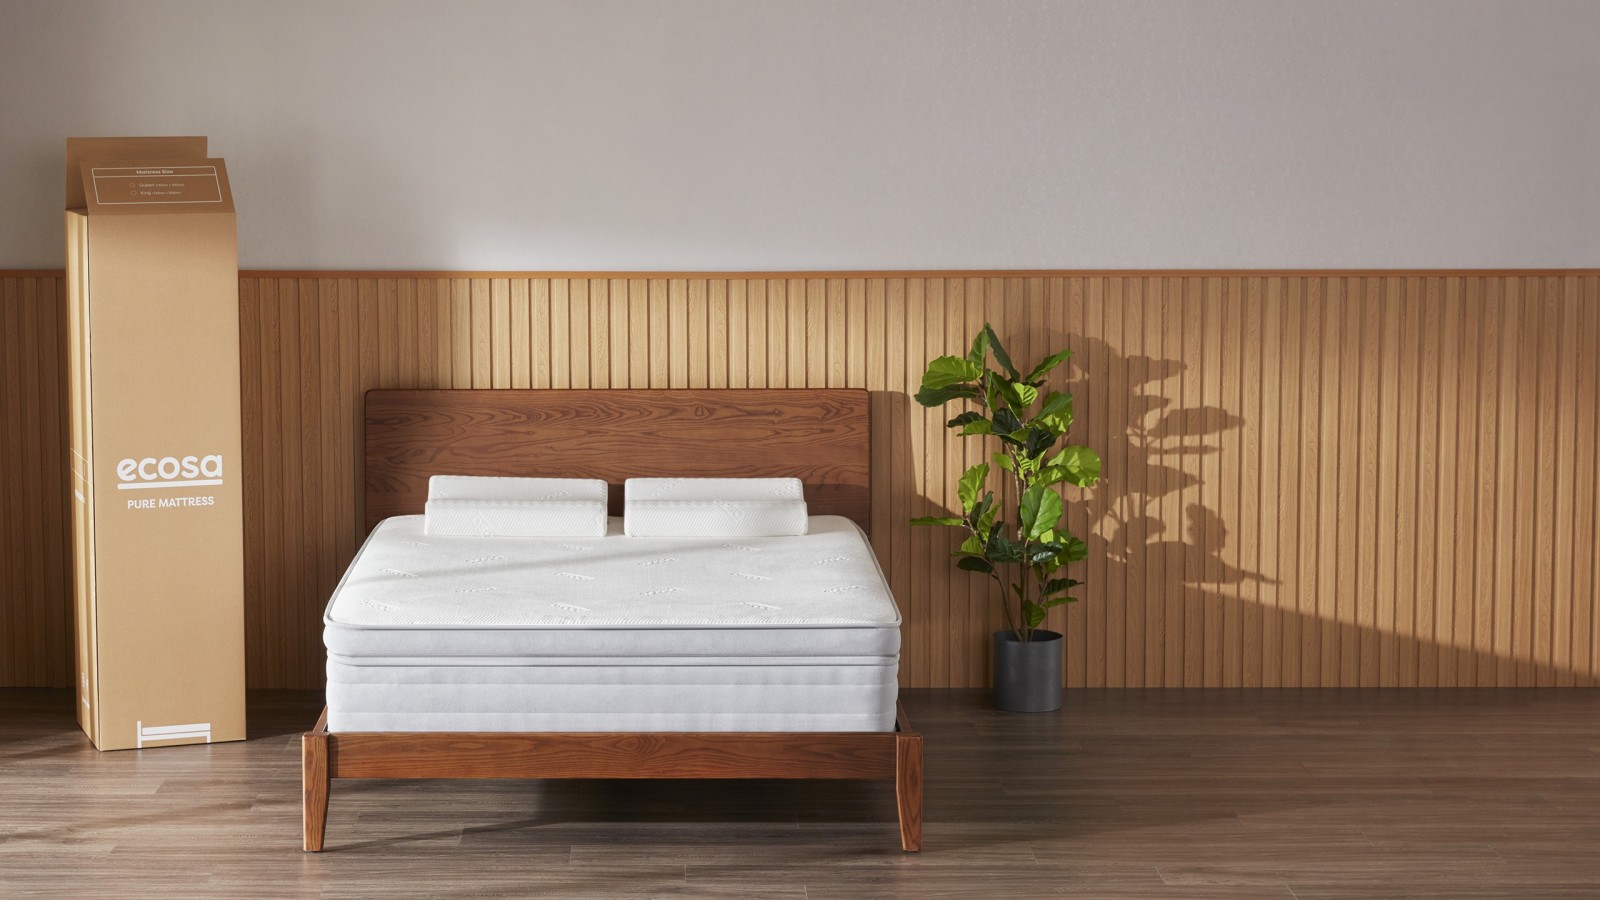 ecosa pure mattress reviews